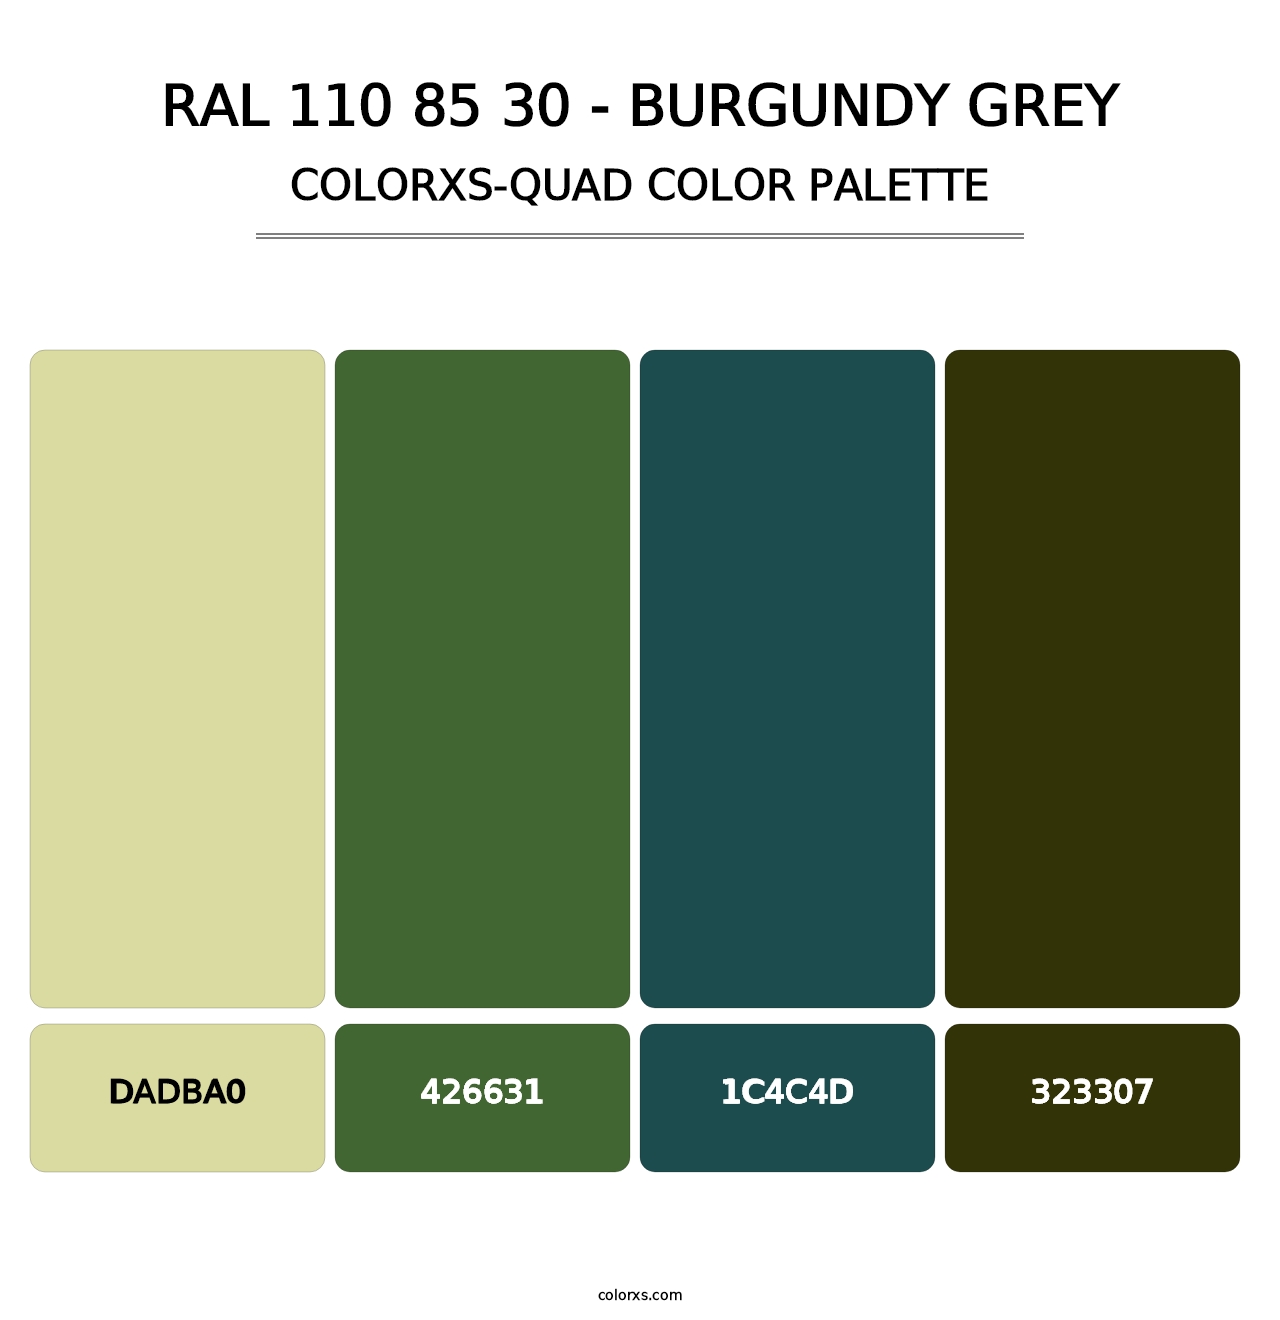 RAL 110 85 30 - Burgundy Grey - Colorxs Quad Palette